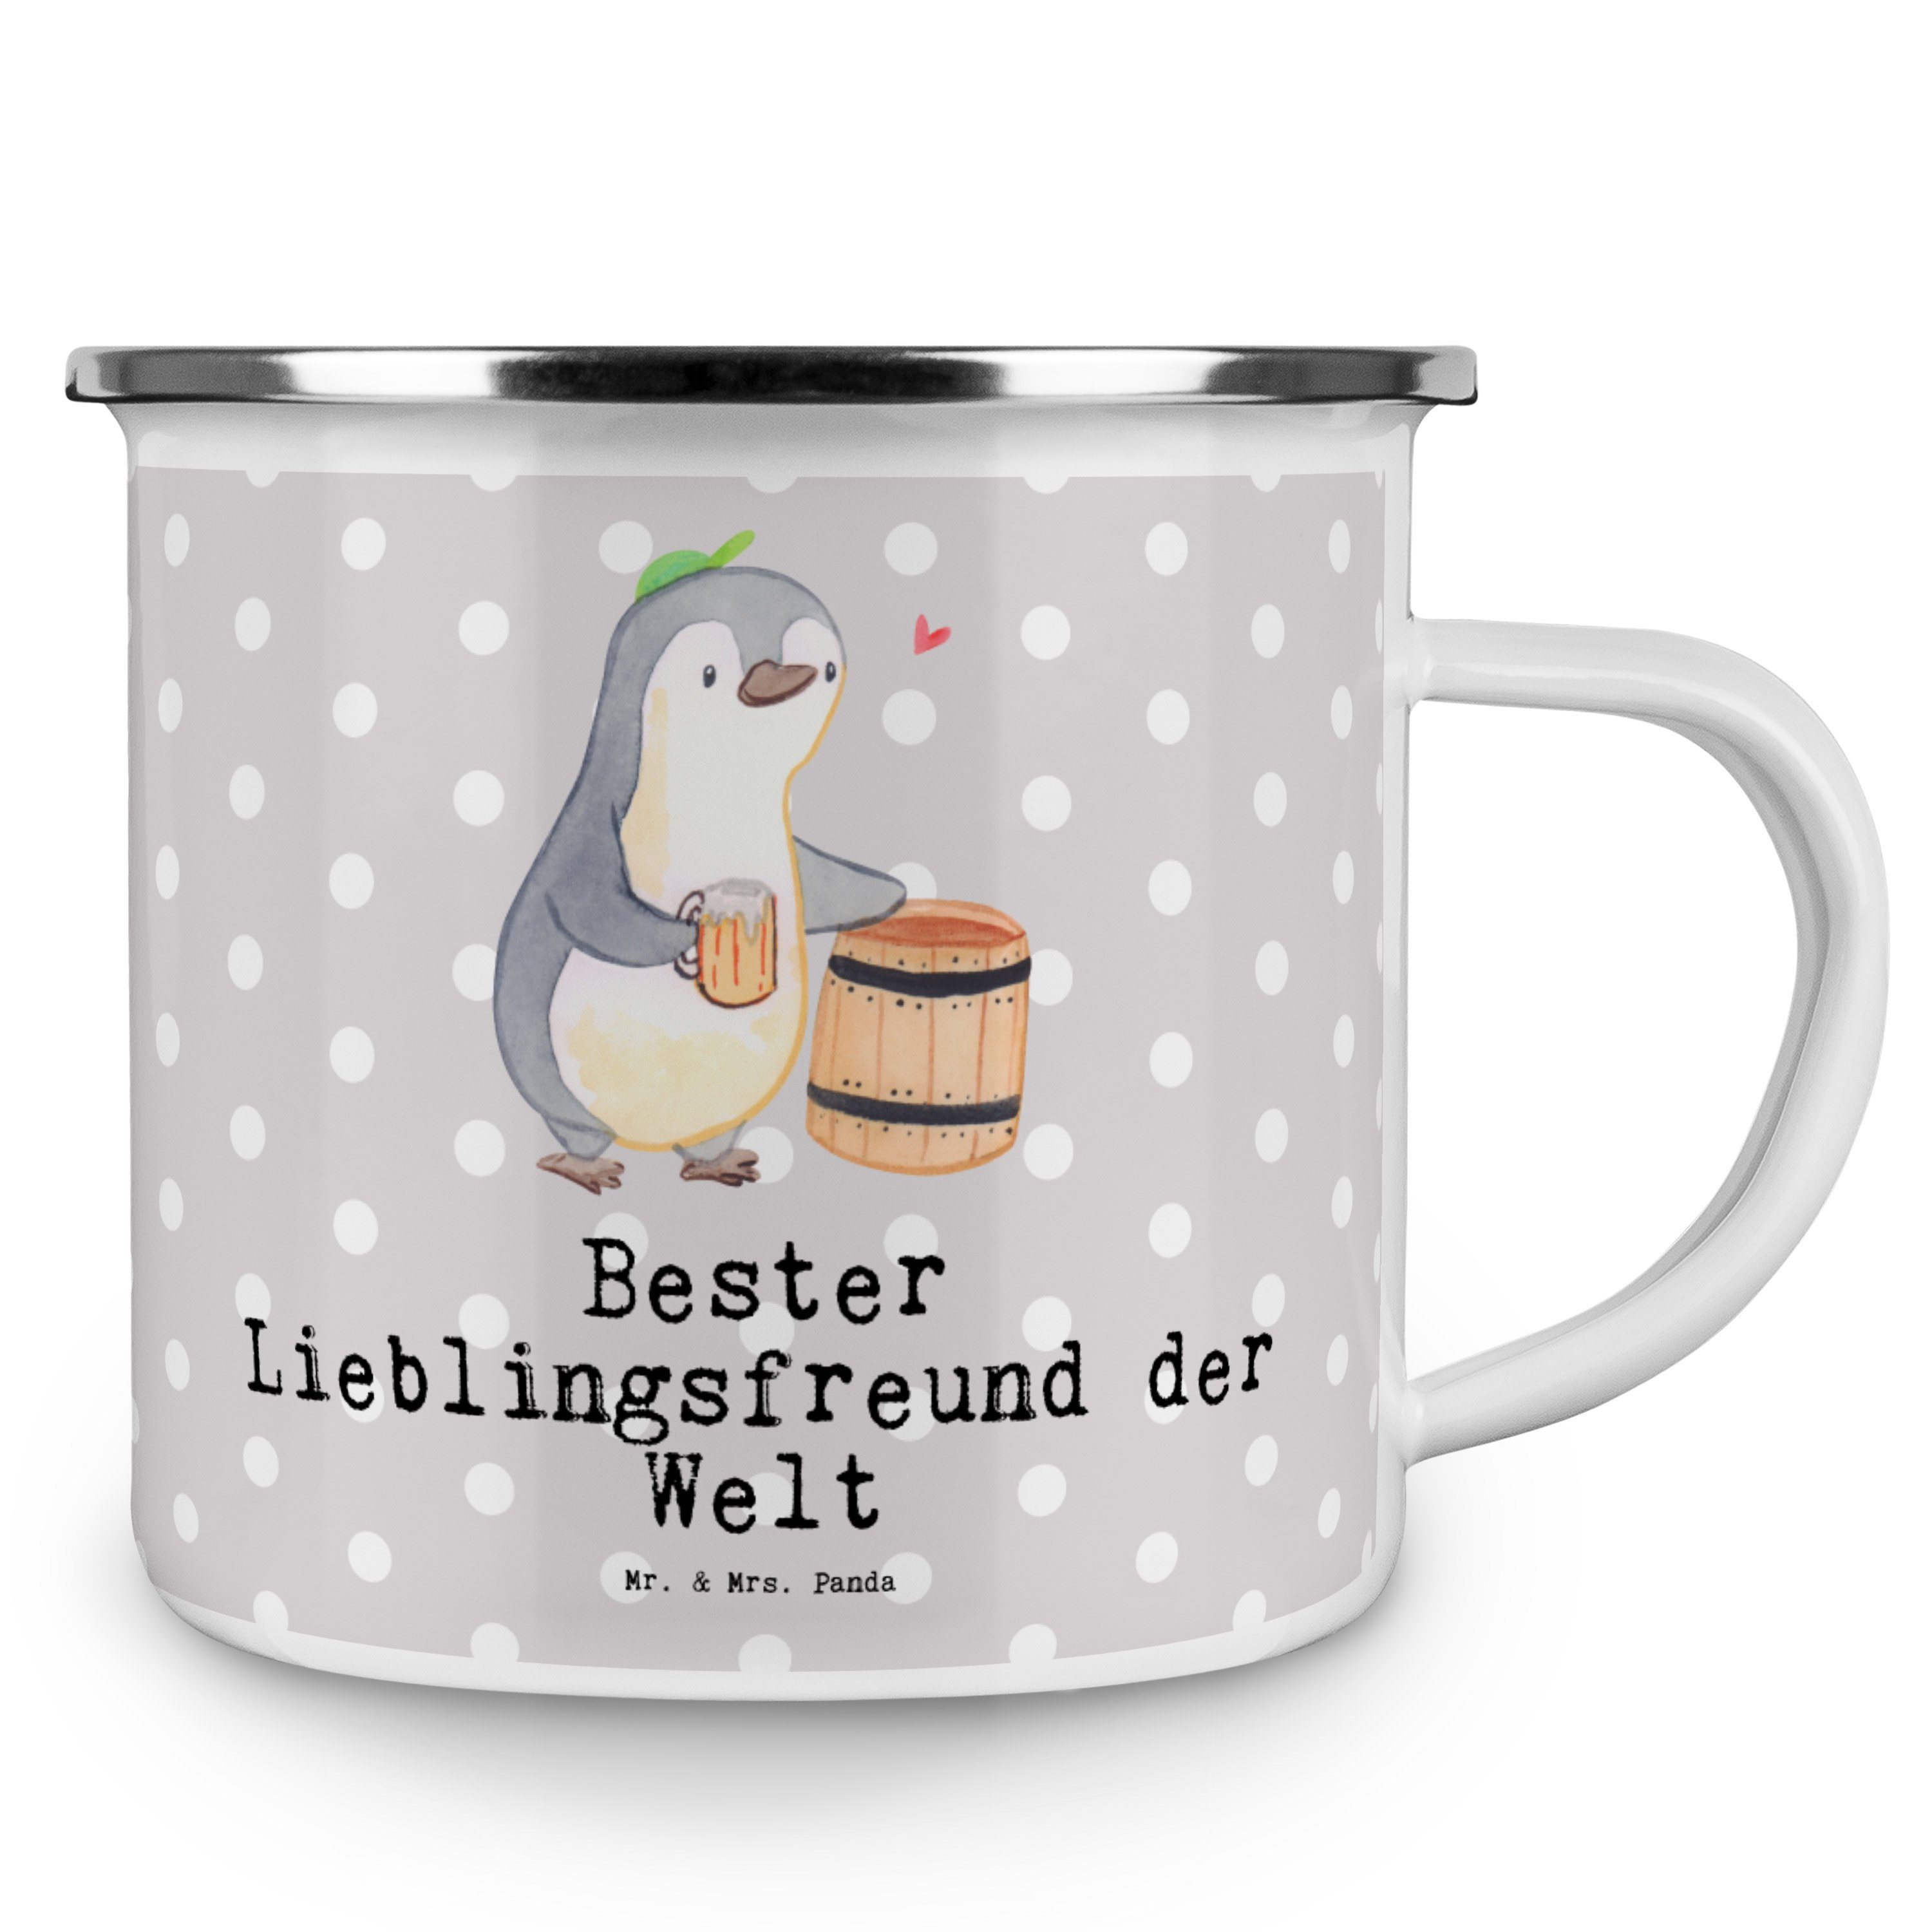 Pinguin Lieblingsfreund Mrs. Mr. Grau Emaille - - Ed, Geschenk, der & Welt Becher Bester Panda Pastell